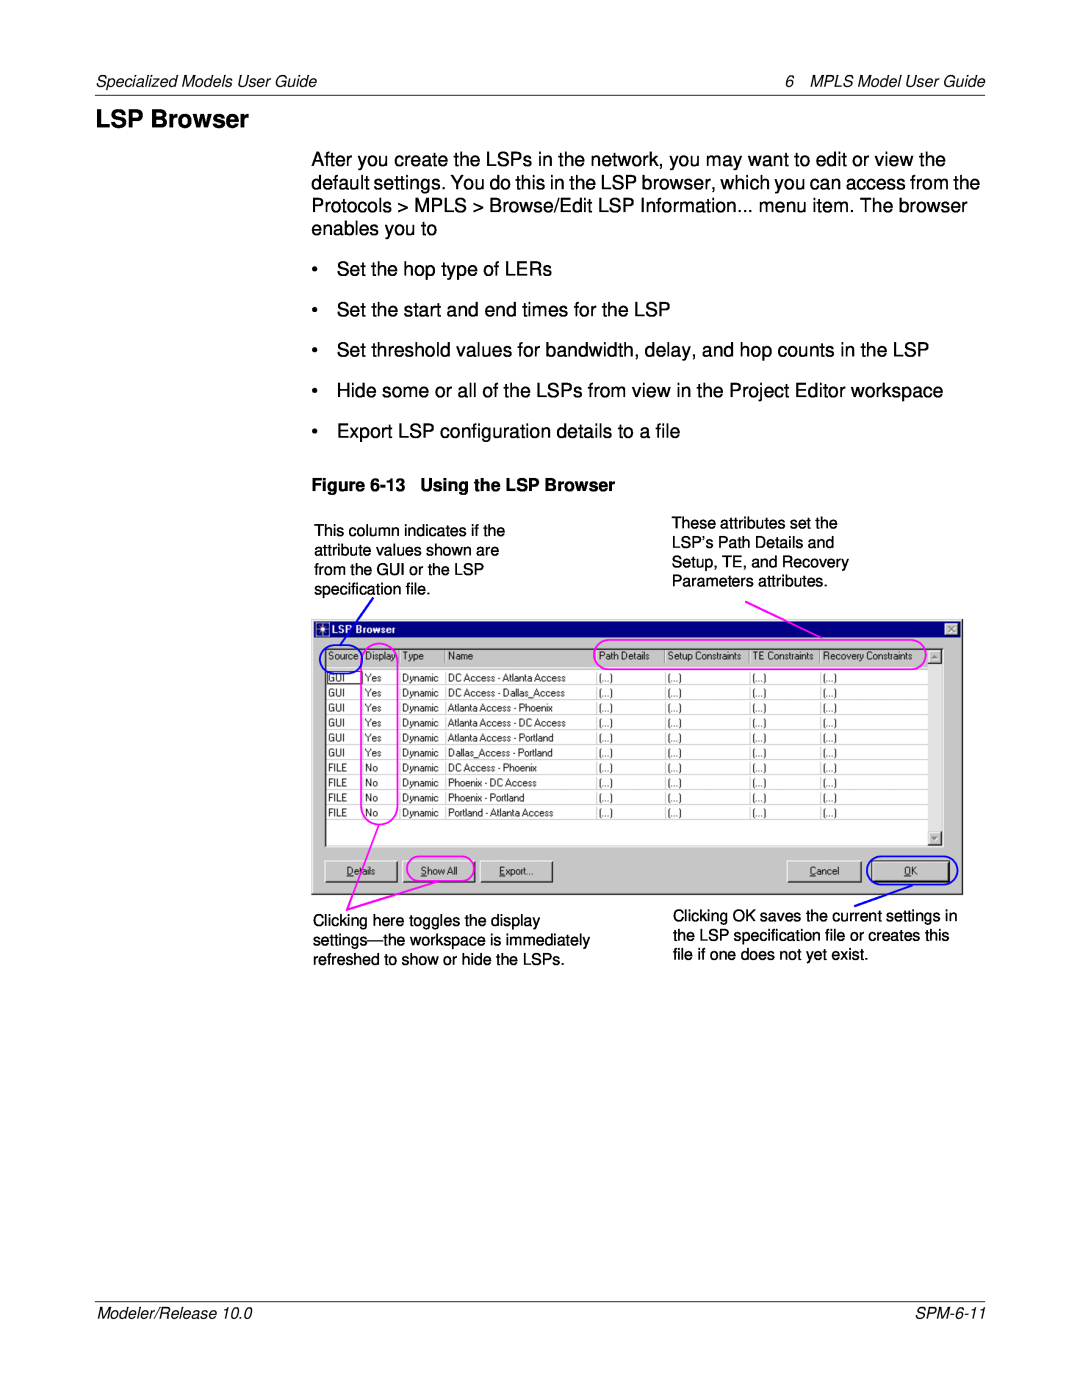 IBM 6 MPLS manual LSP Browser 